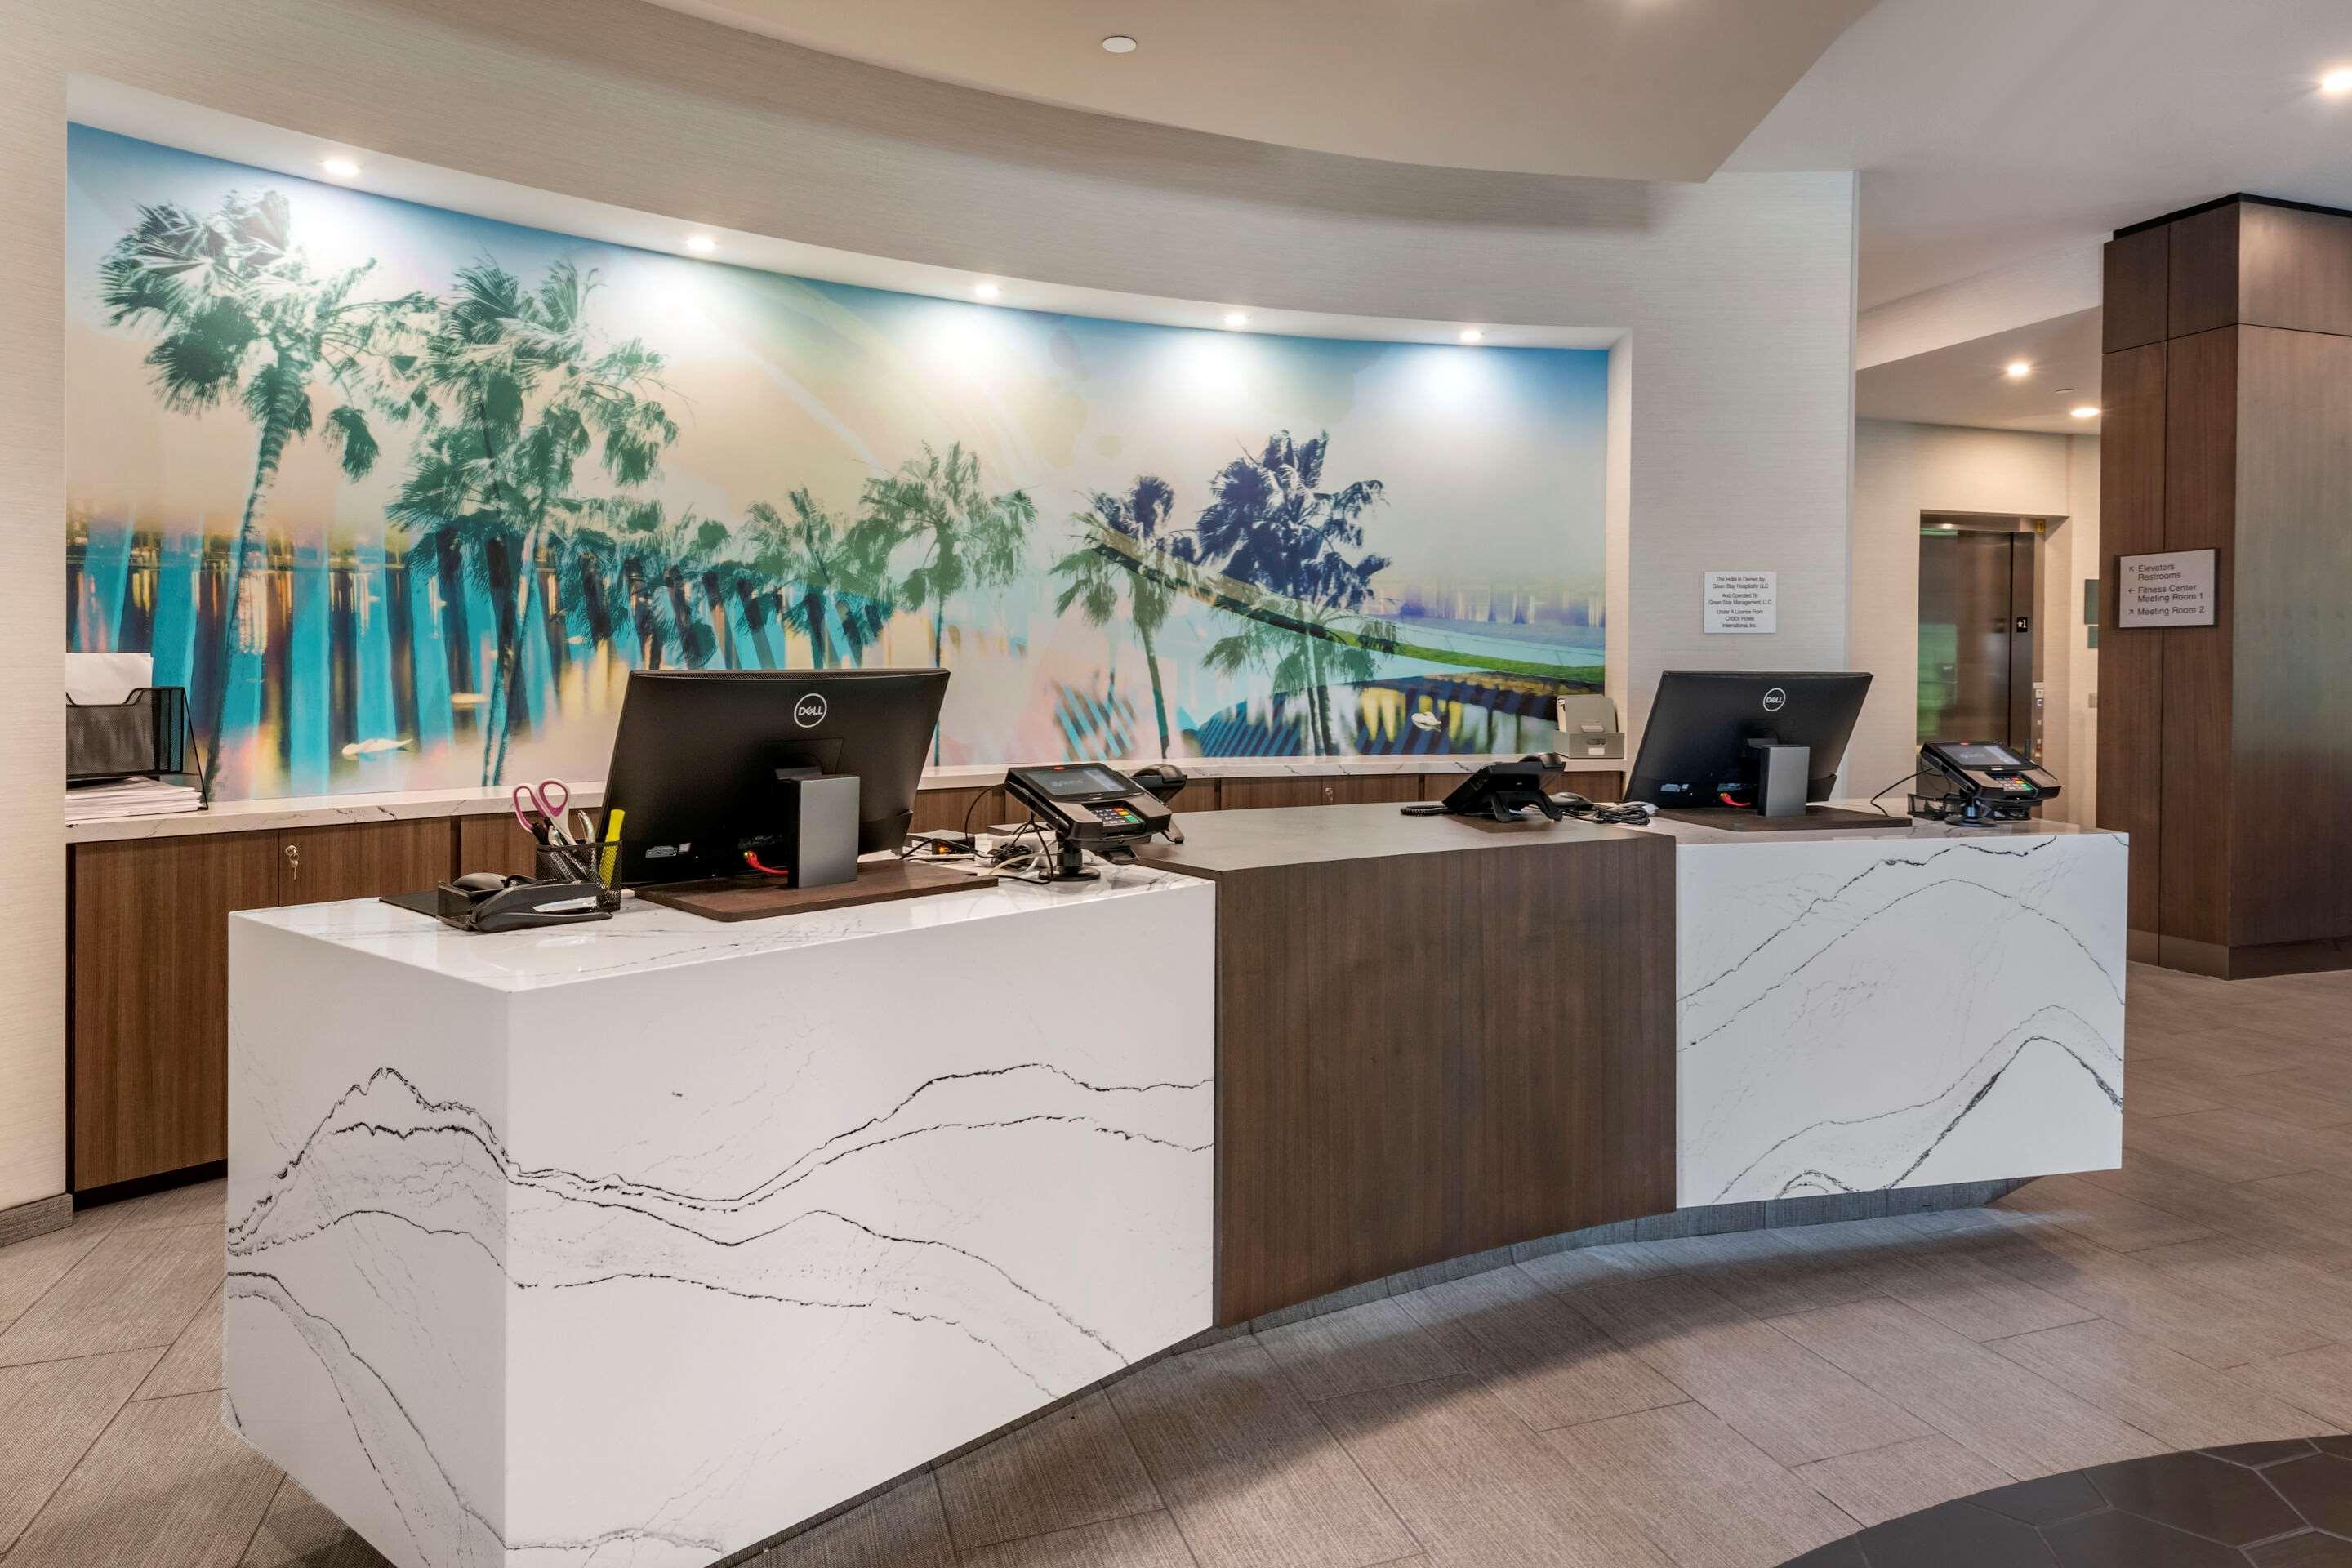 Cambria Hotel Orlando Airport Exterior photo